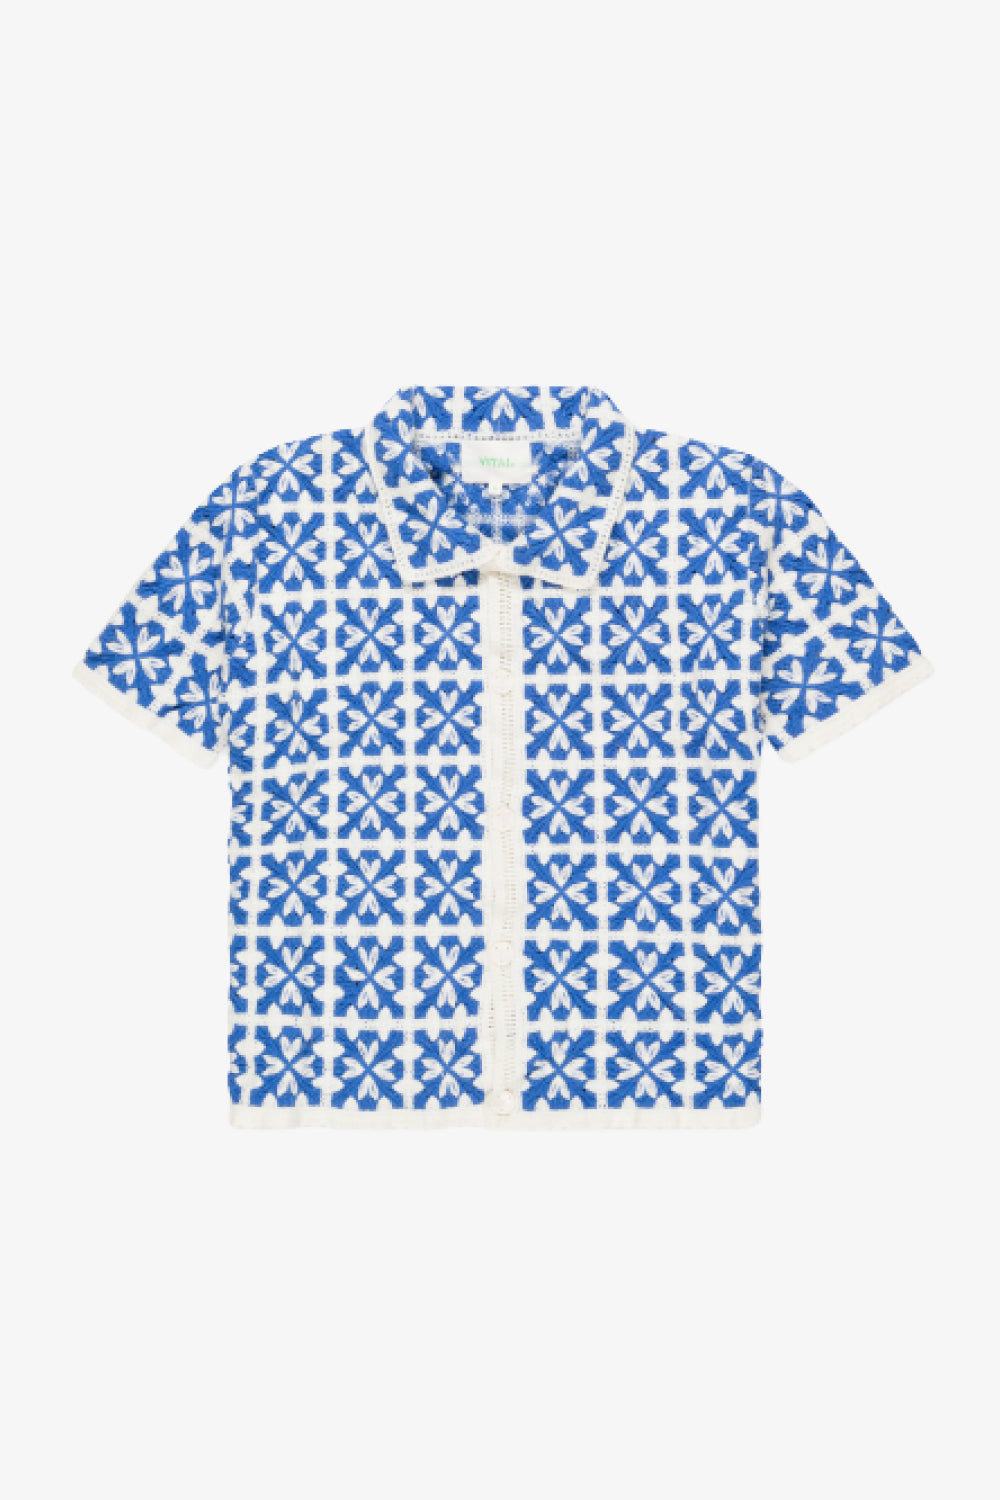 Azure Crochet Square Shirt